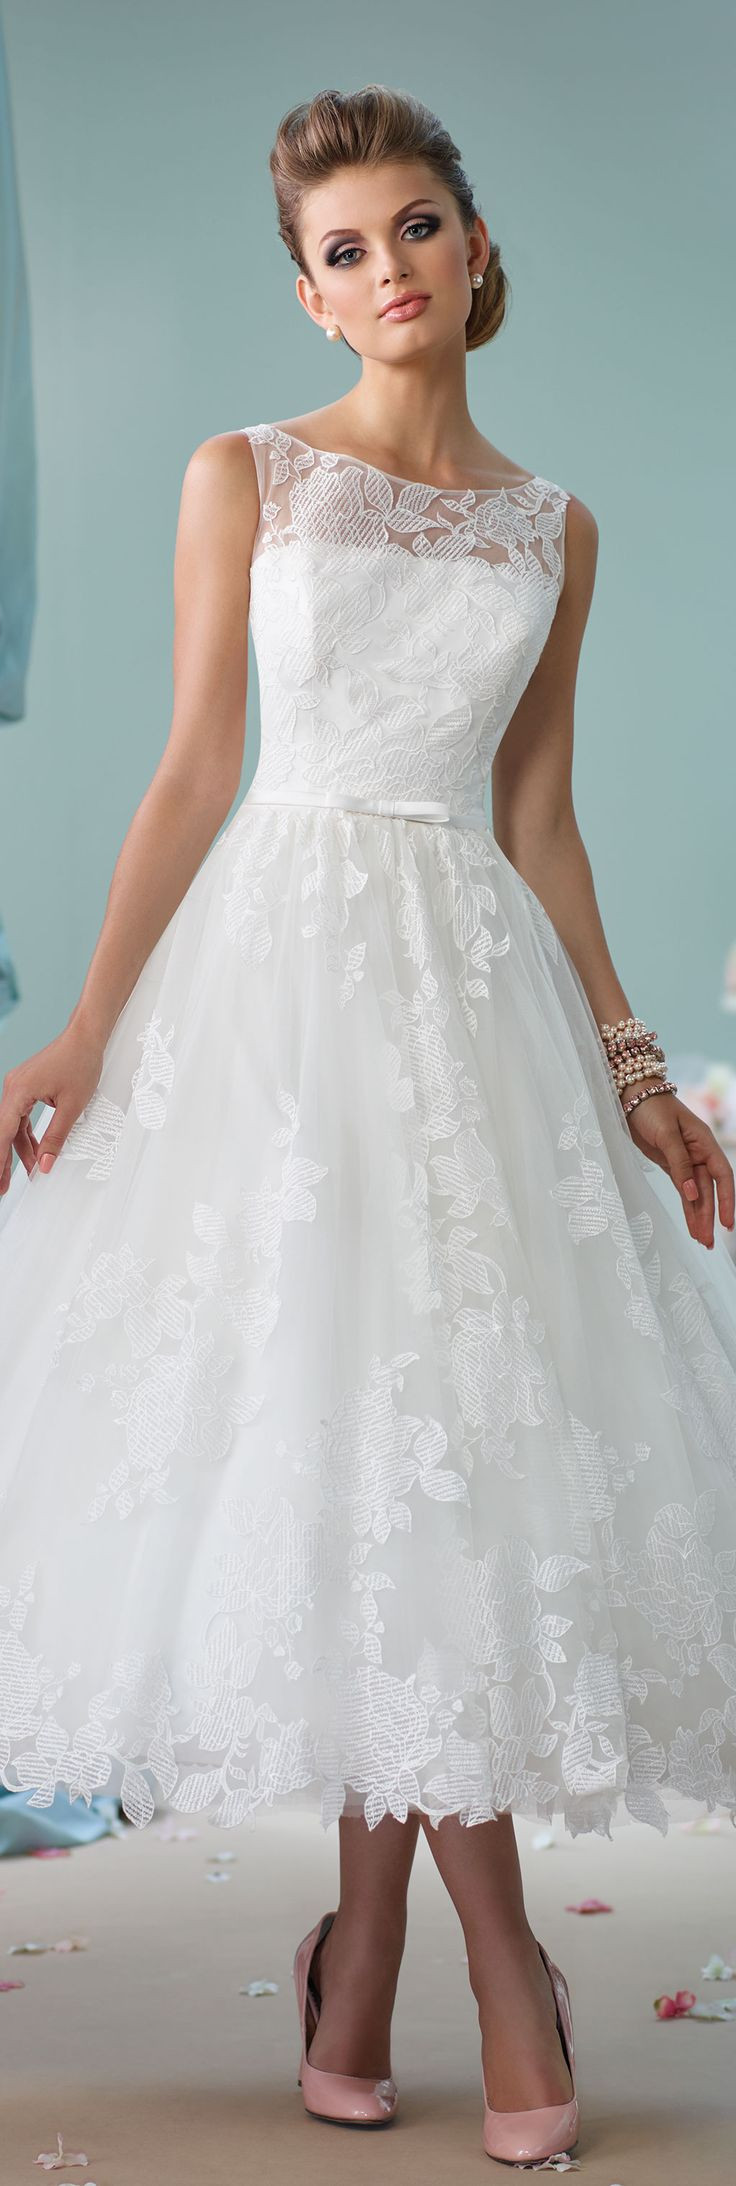 Simple Short Wedding Dresses
 Best 25 White tea length dress ideas on Pinterest